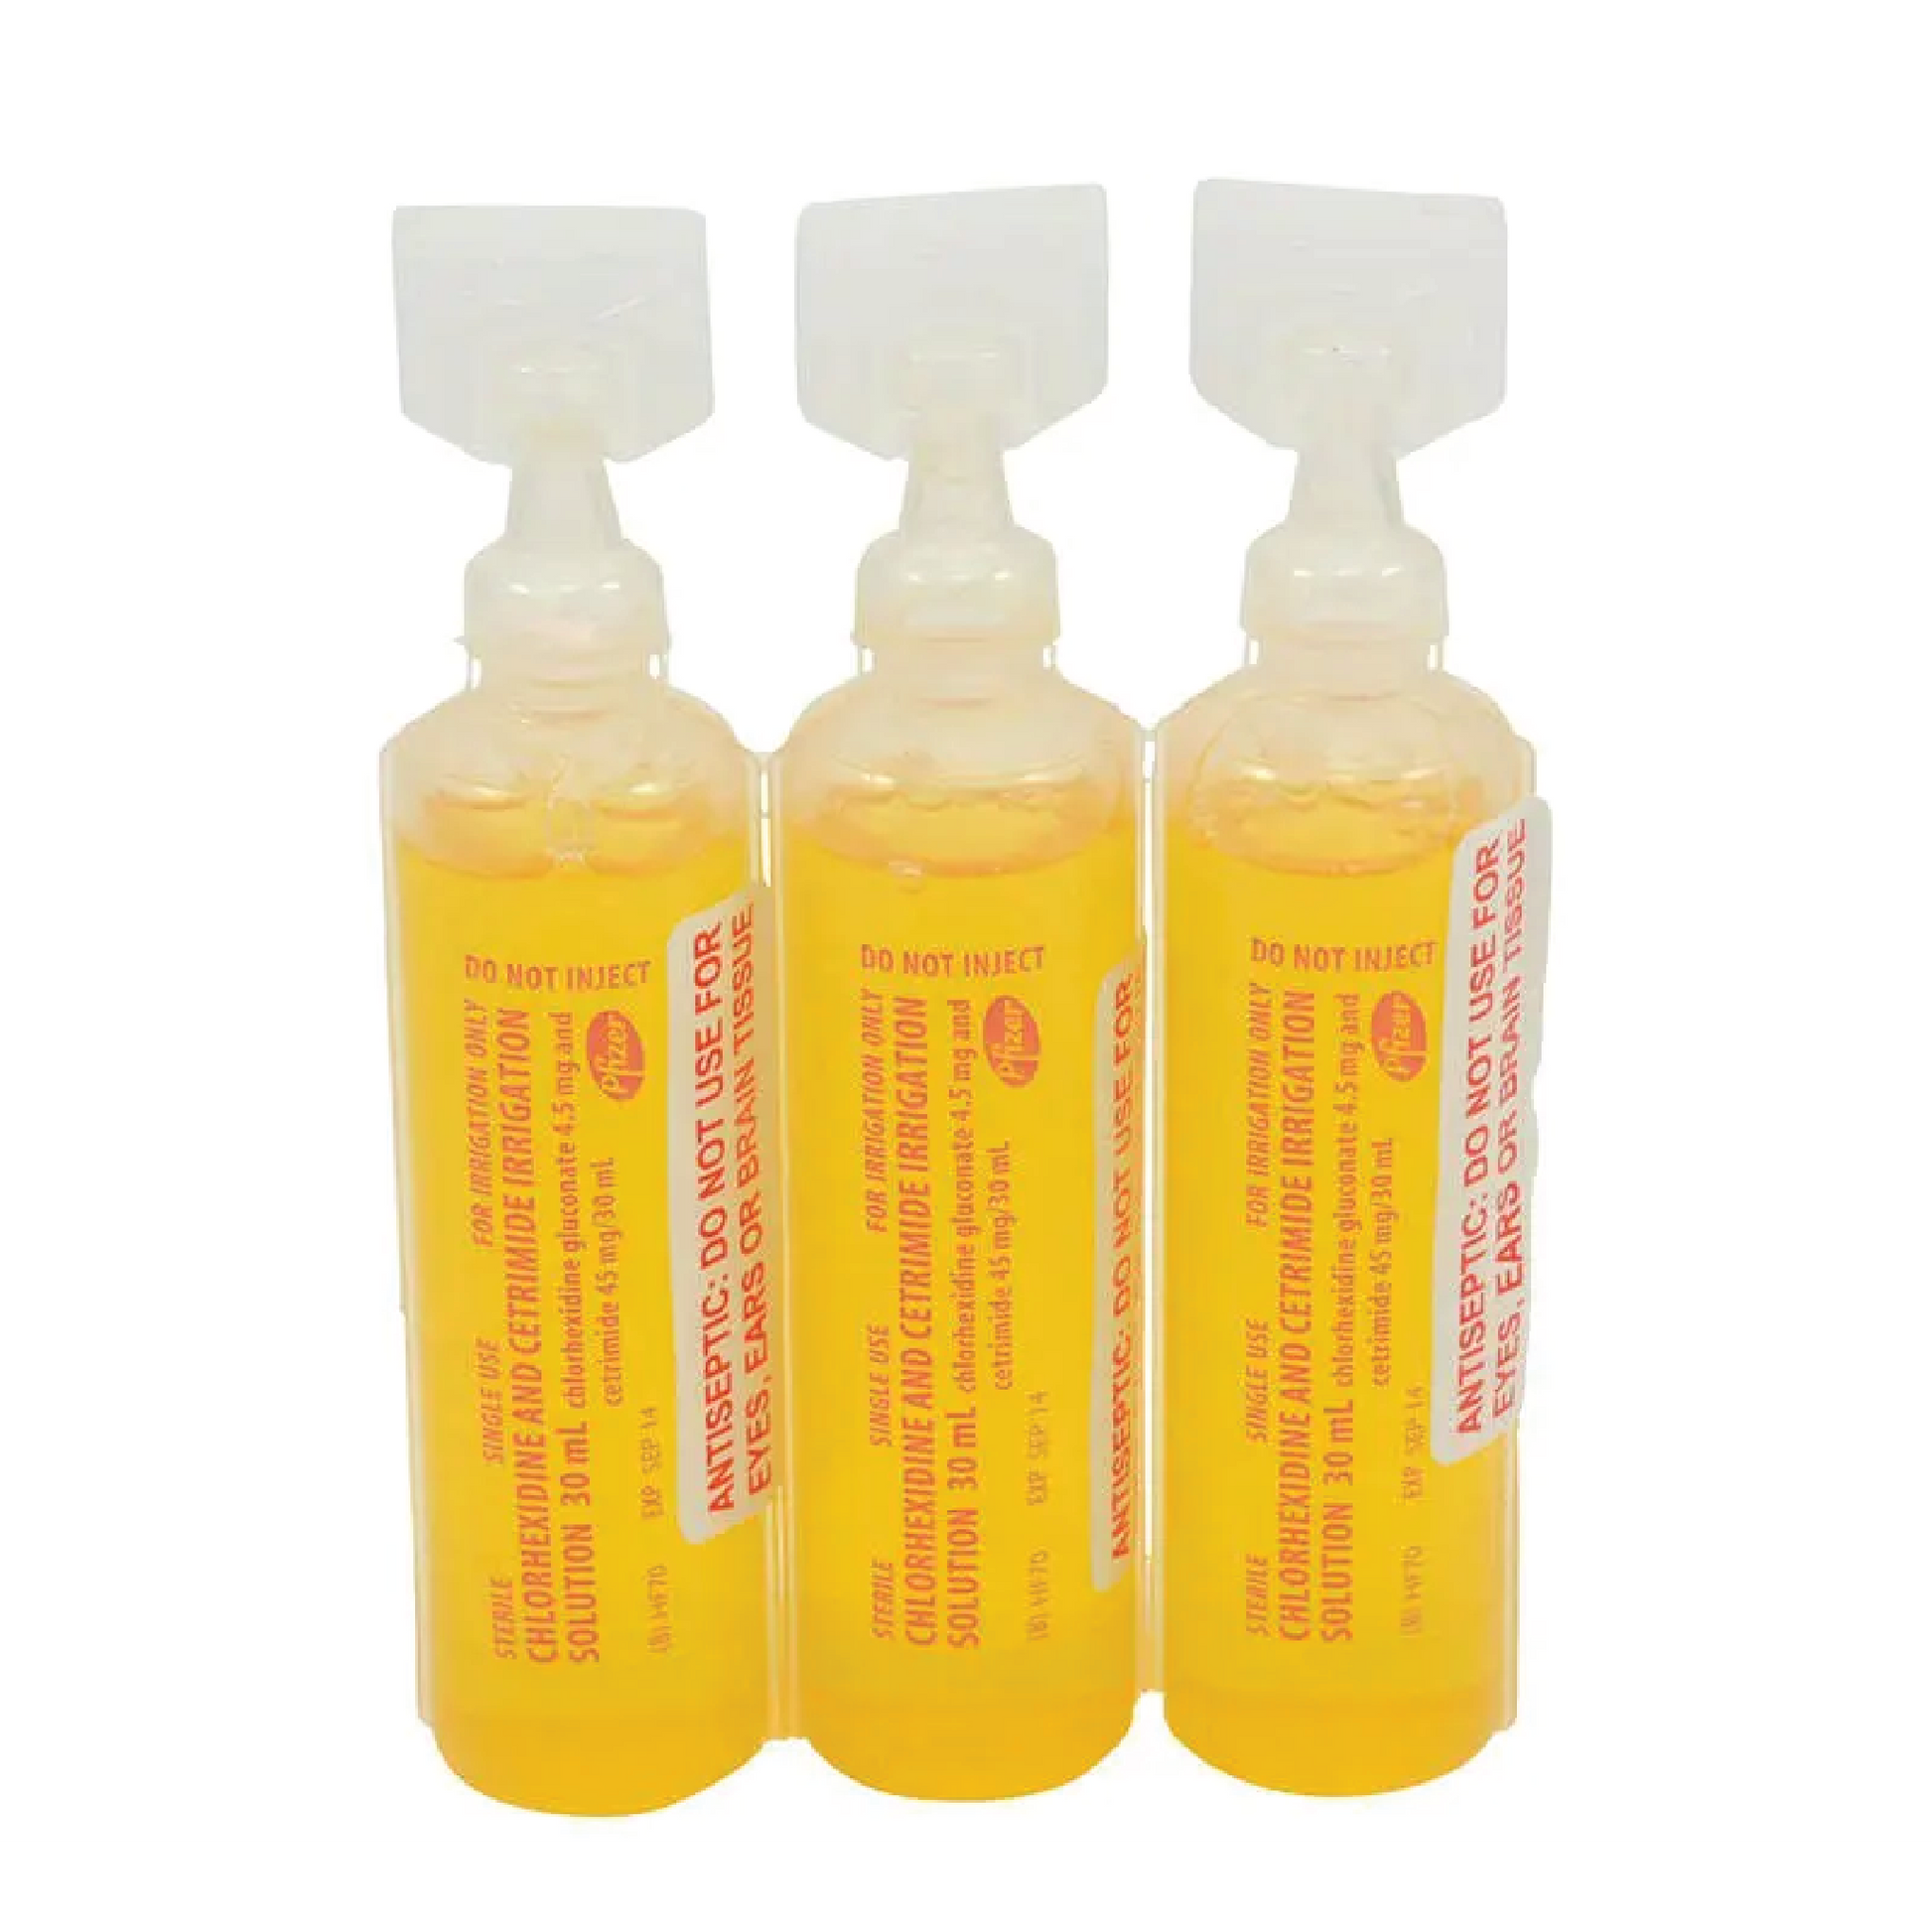 Chlorhexidine Solution - 30ml tubes